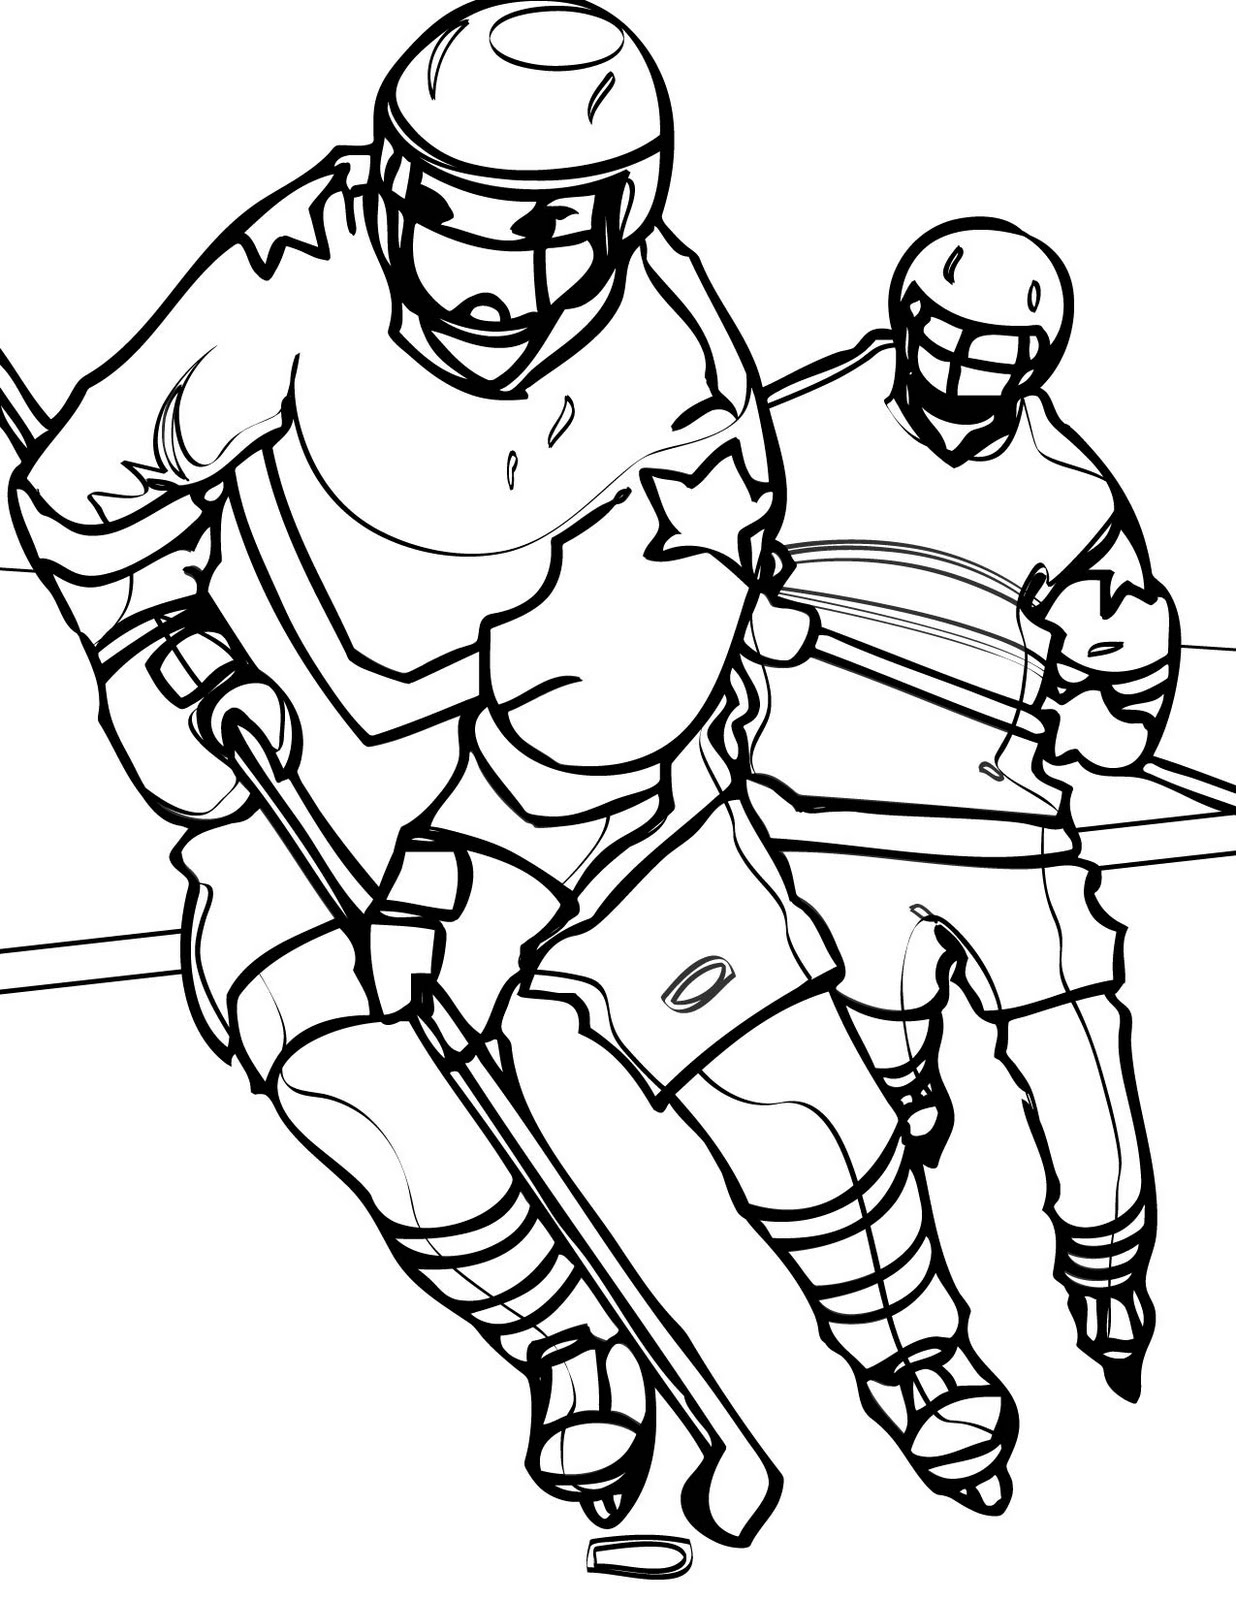 Playing Hockey